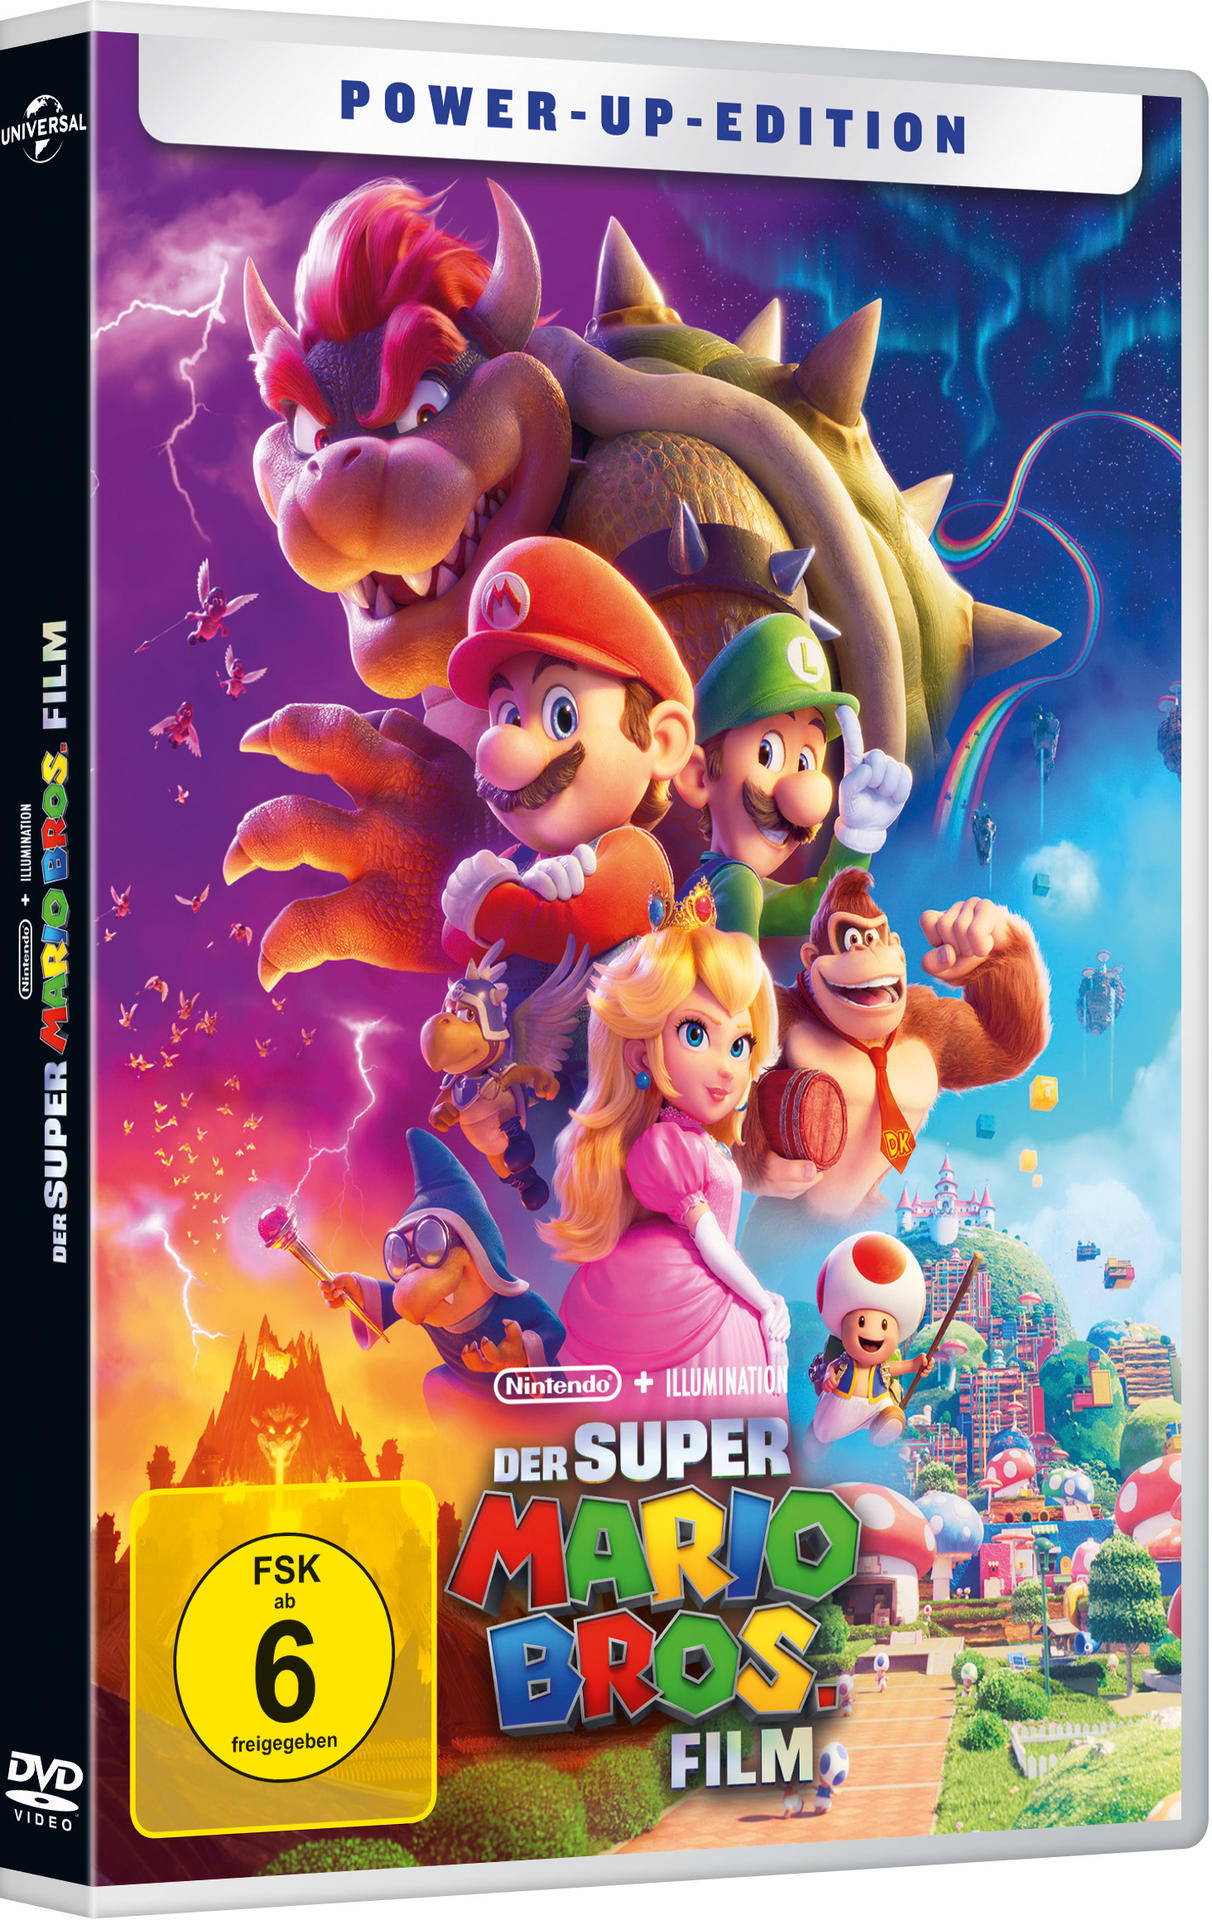 Der Super Mario Bros. DVD Film